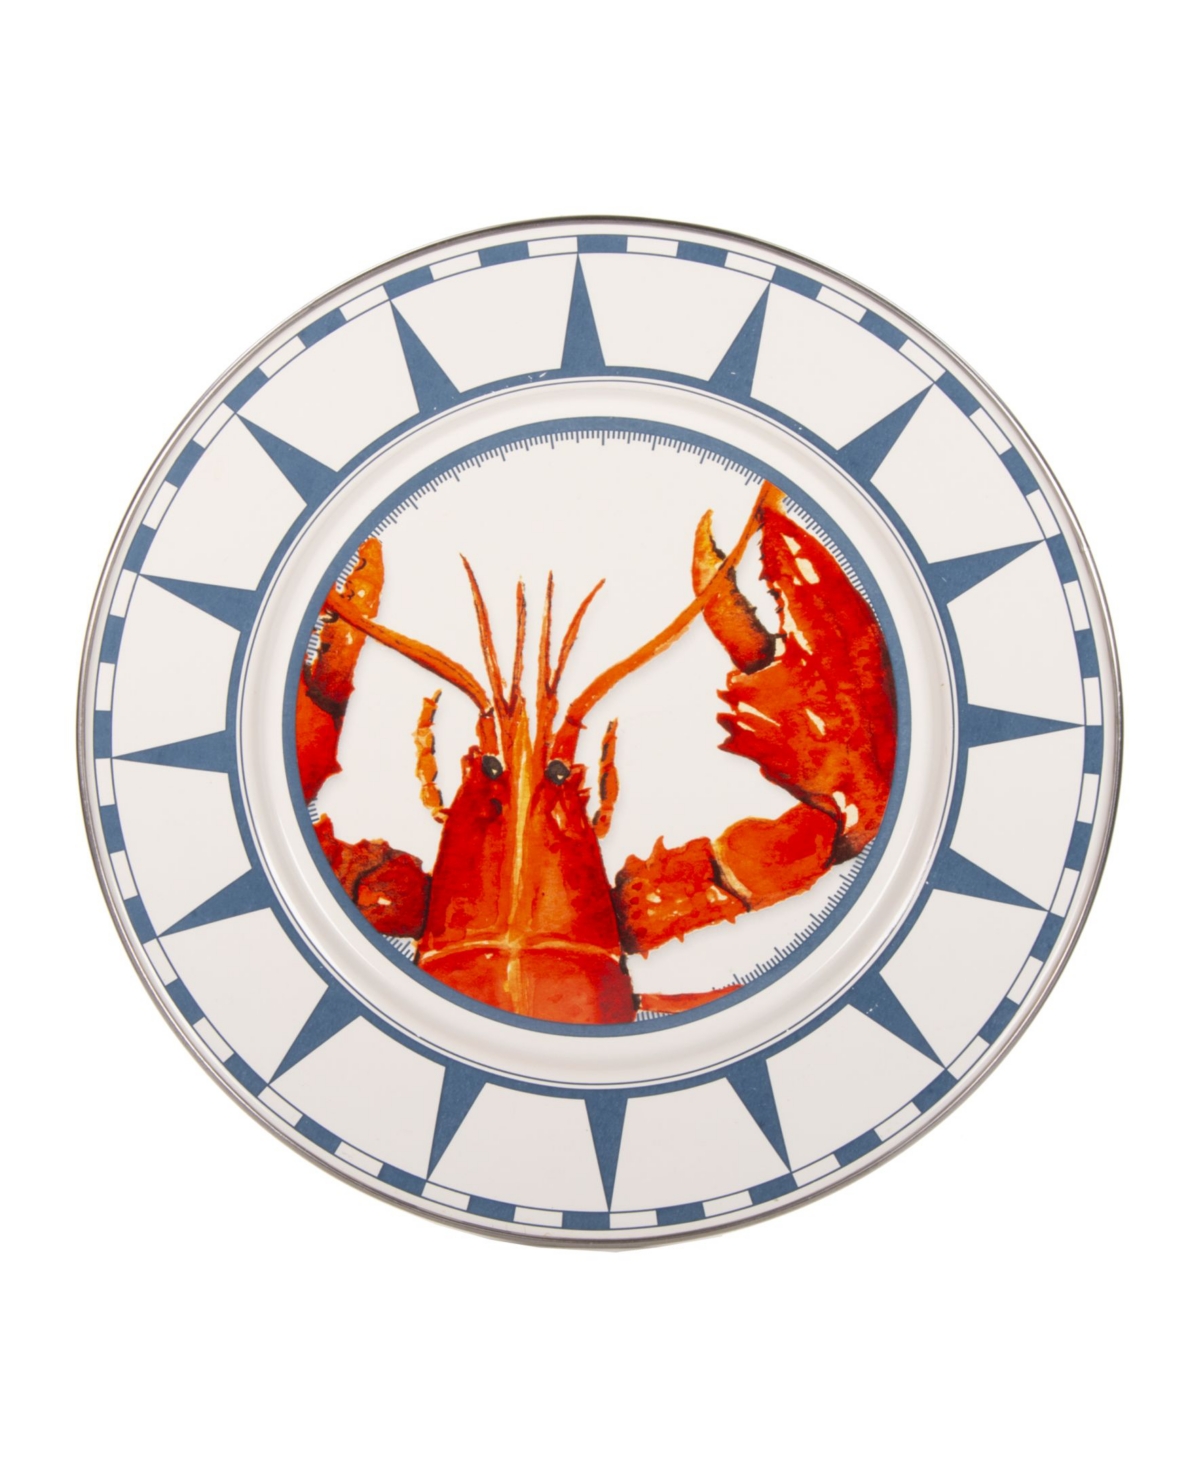 Lobster Enamelware Dinner Plates, Set of 4 - Multi